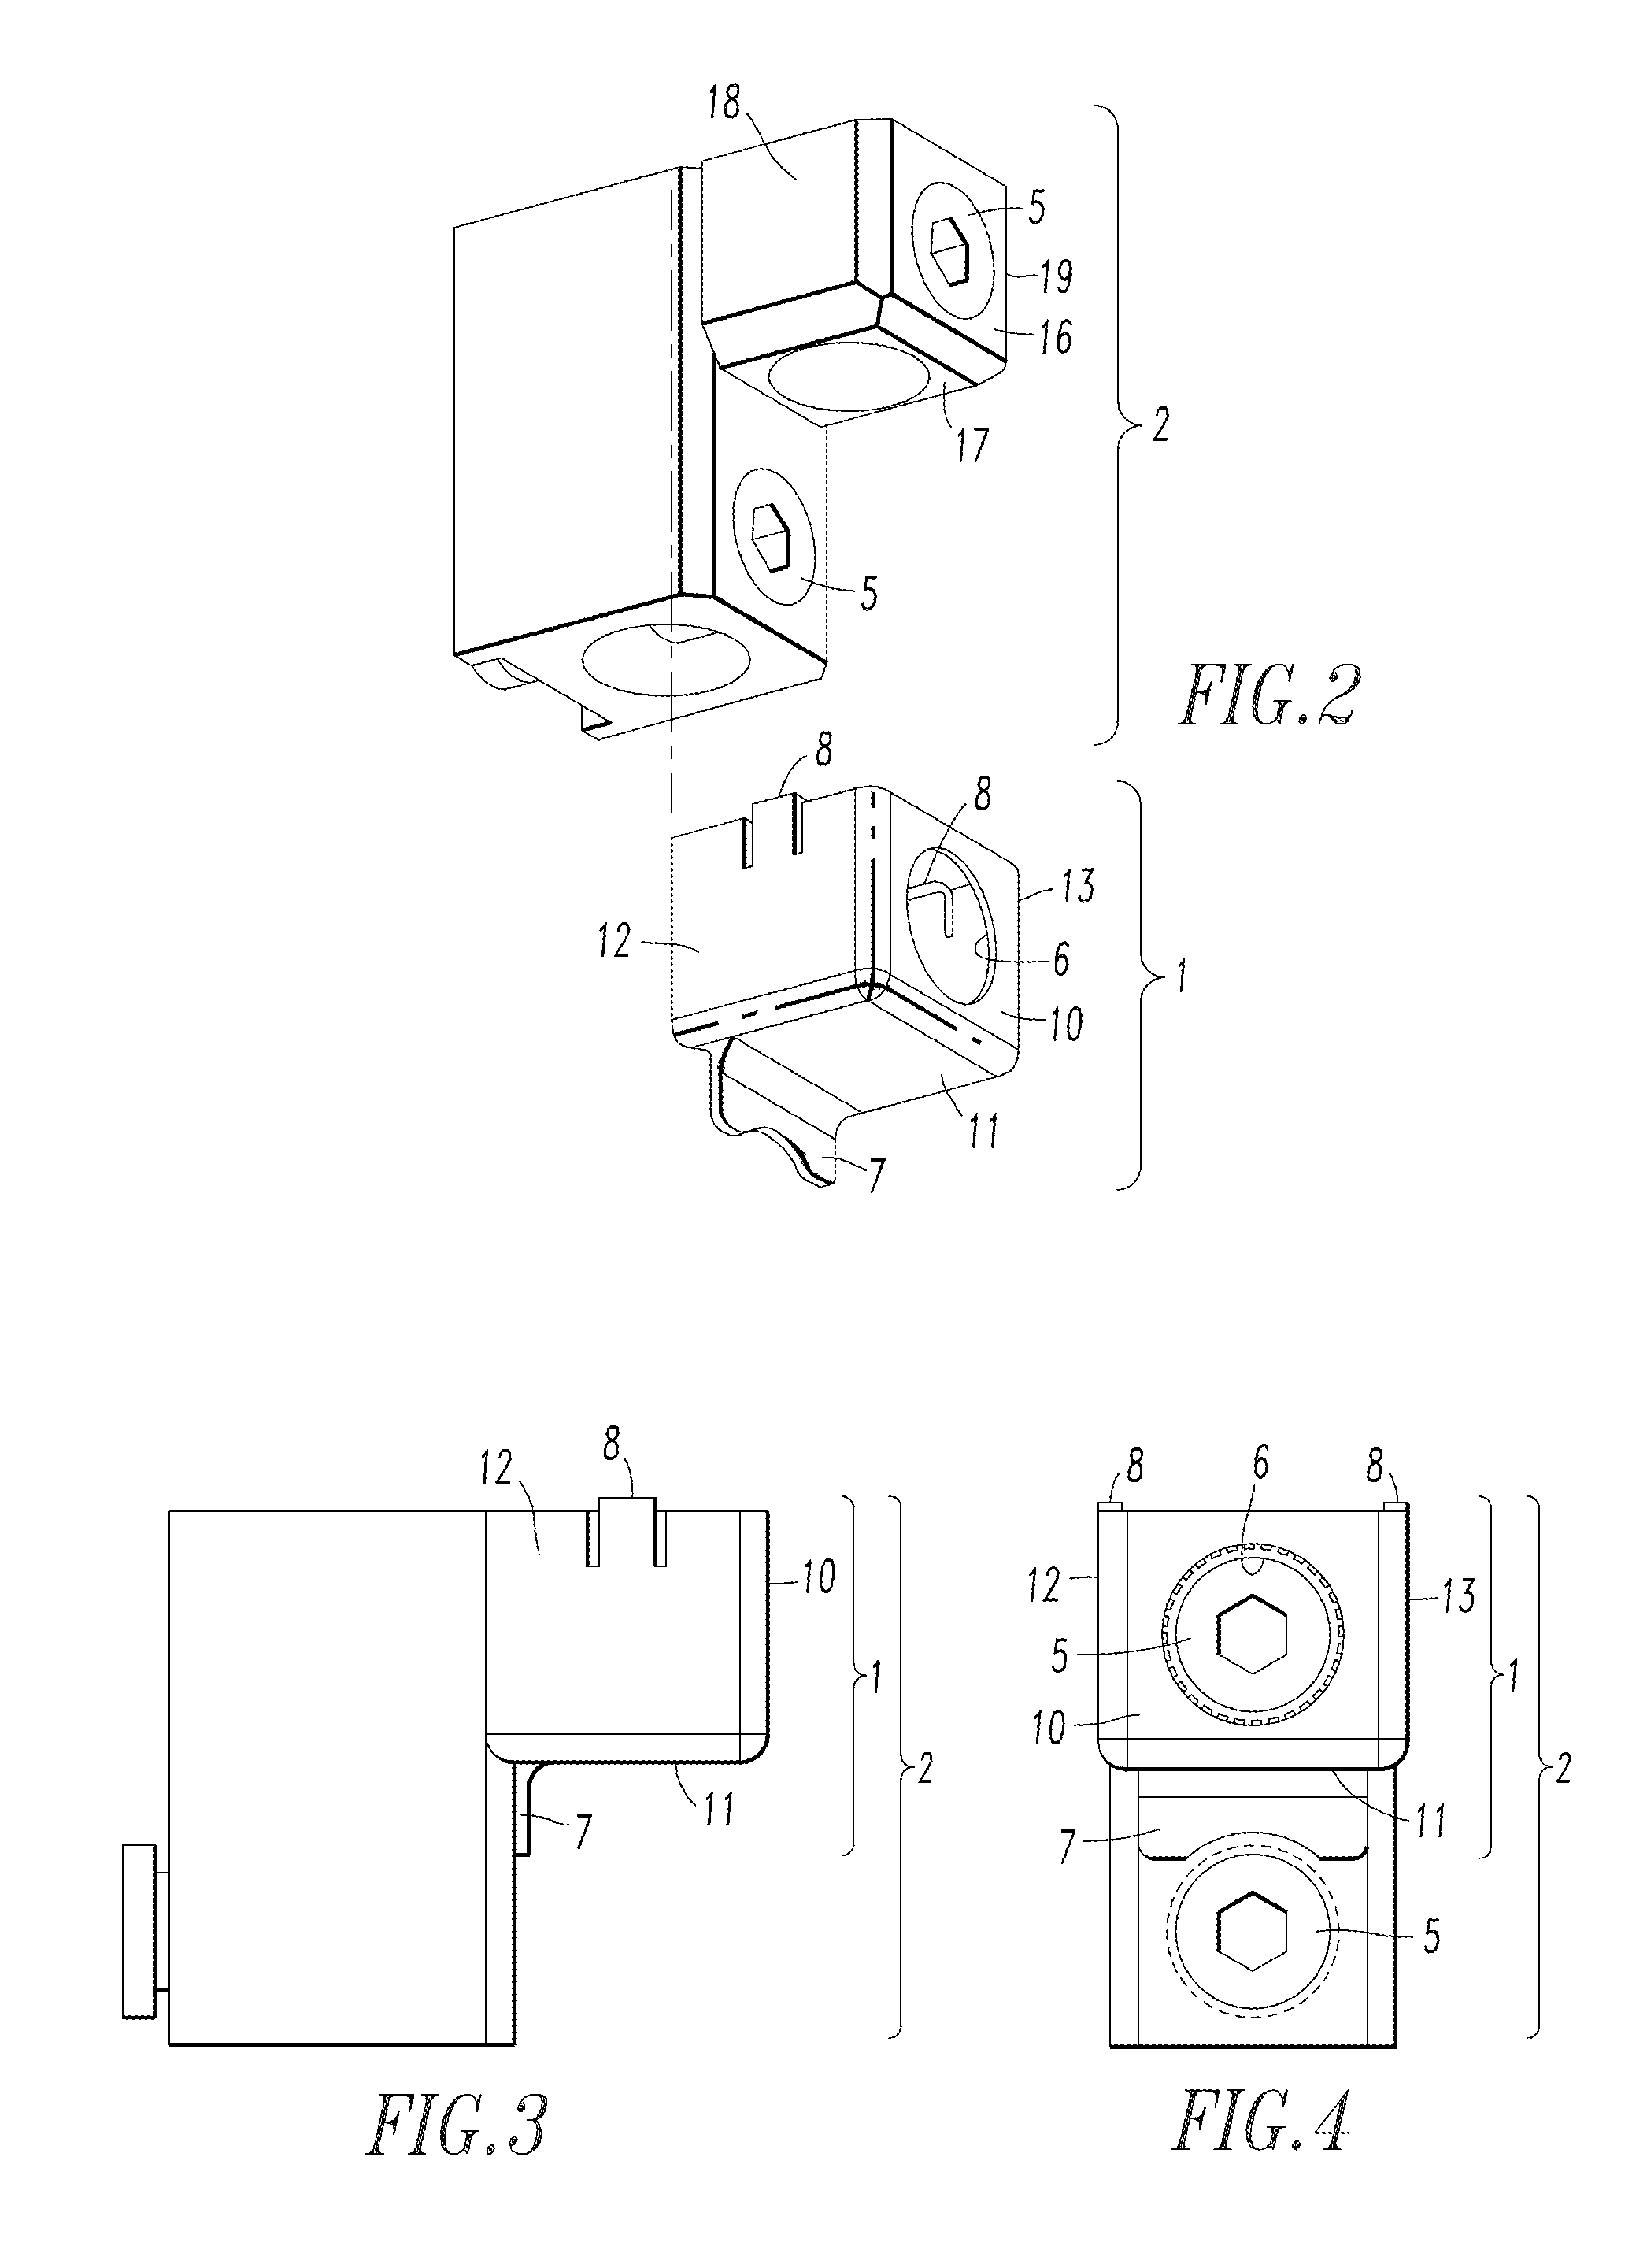 Circuit breaker, circuit breaker terminal lug cover, and method of protecting a terminal lug